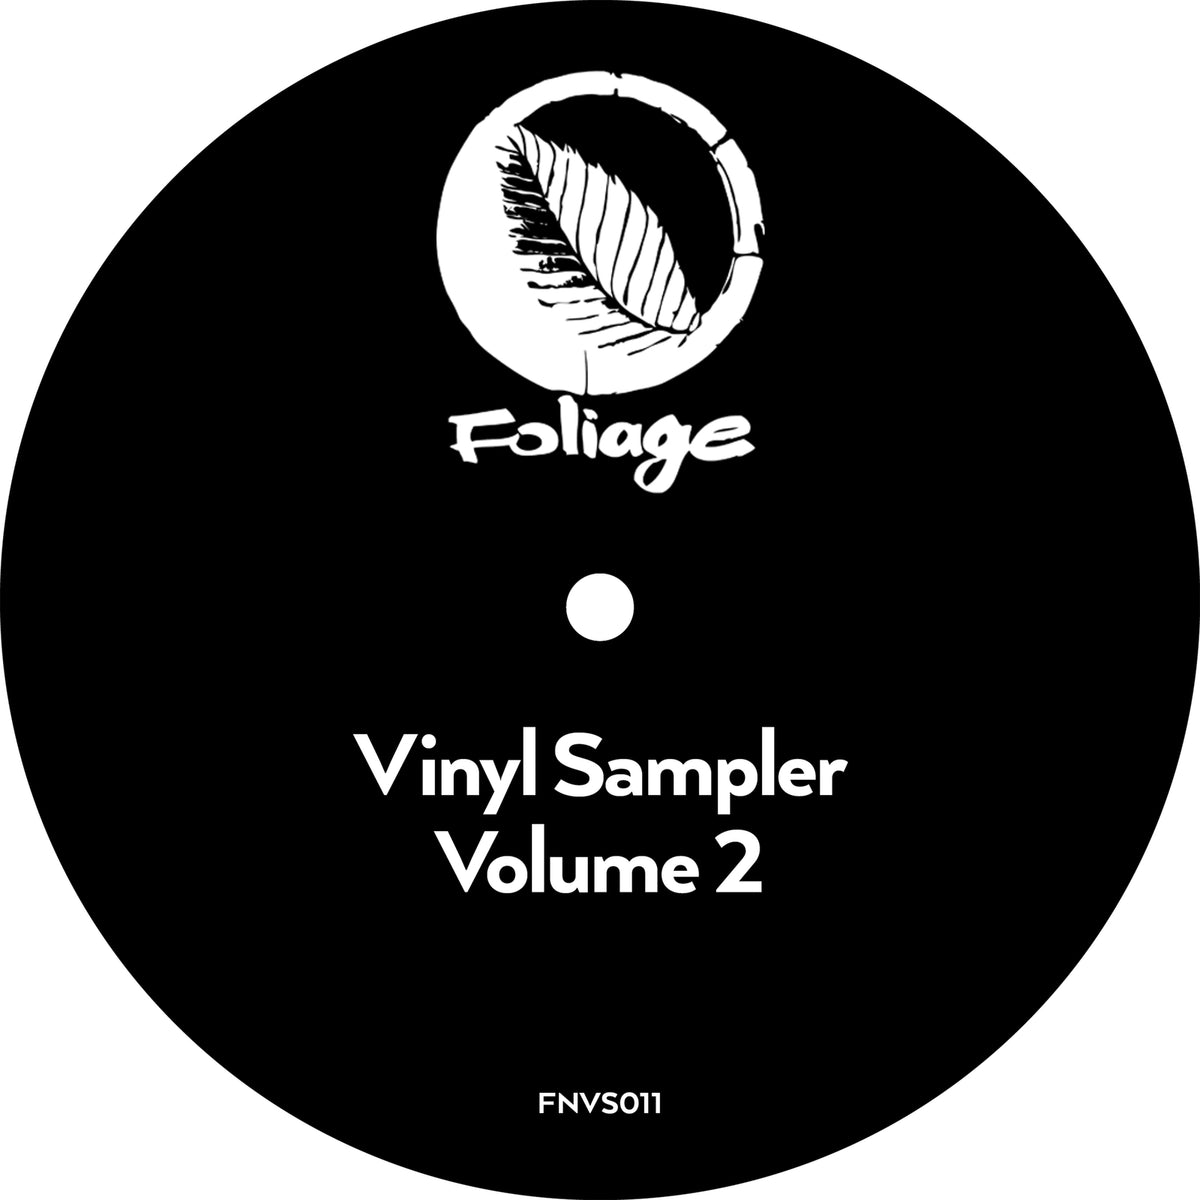 Various Artists - Foliage Records Vinyl Sampler Volume 2 - FNVS011